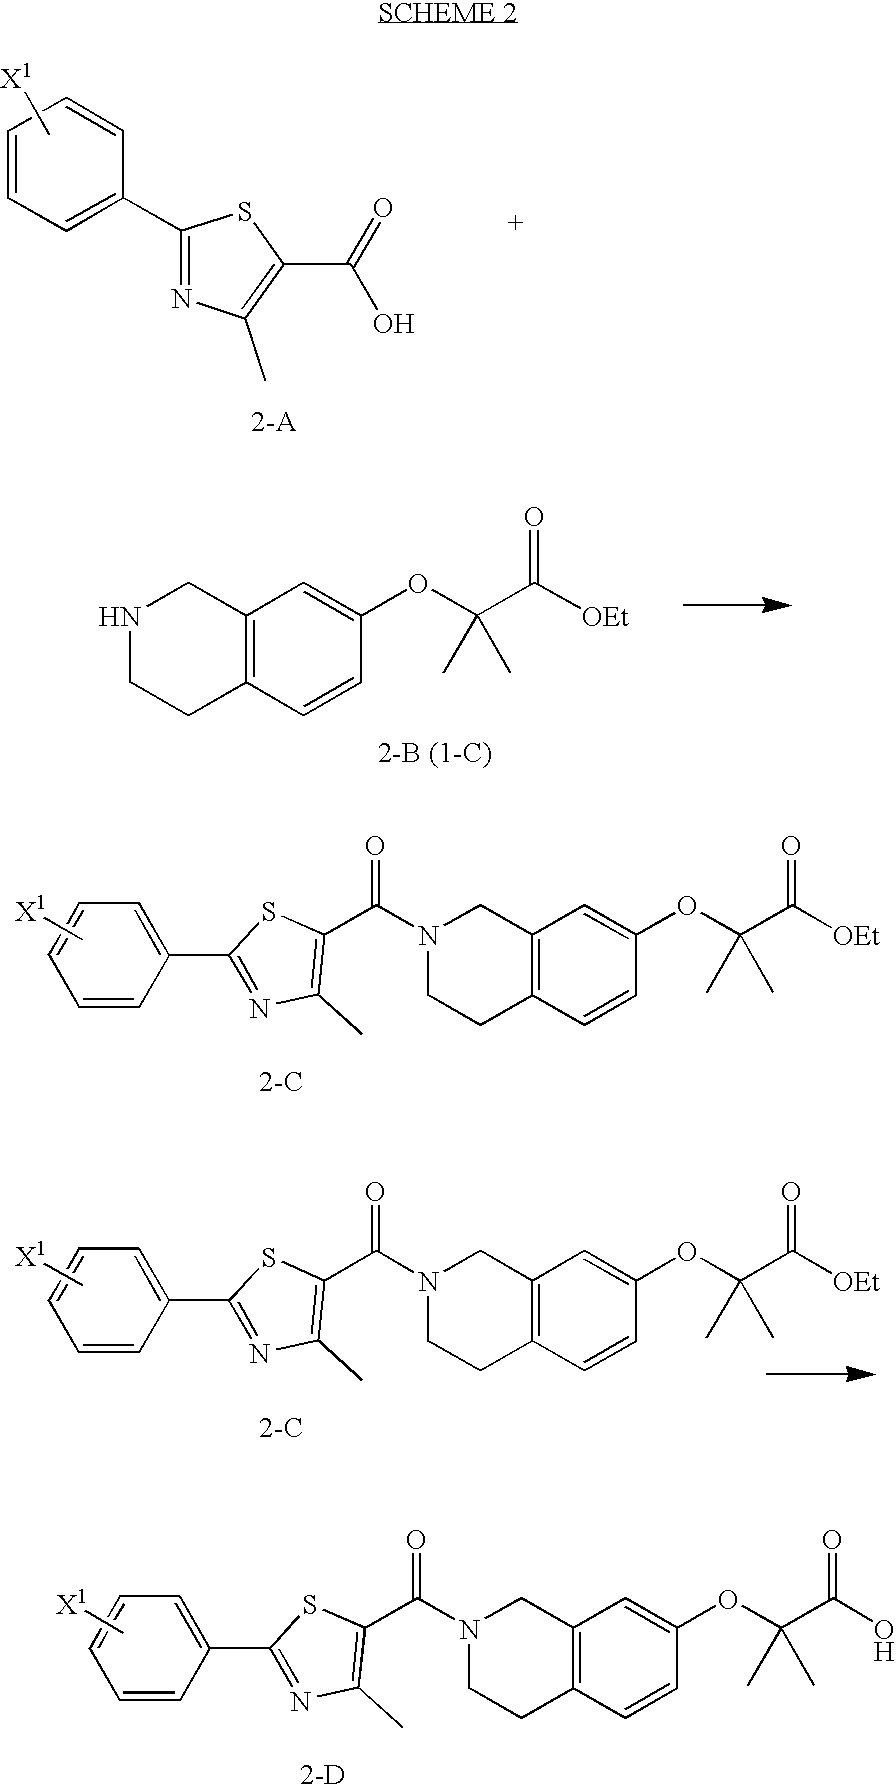 Tetrahydroisoquinoline derivatives as PPAR-alpha activators